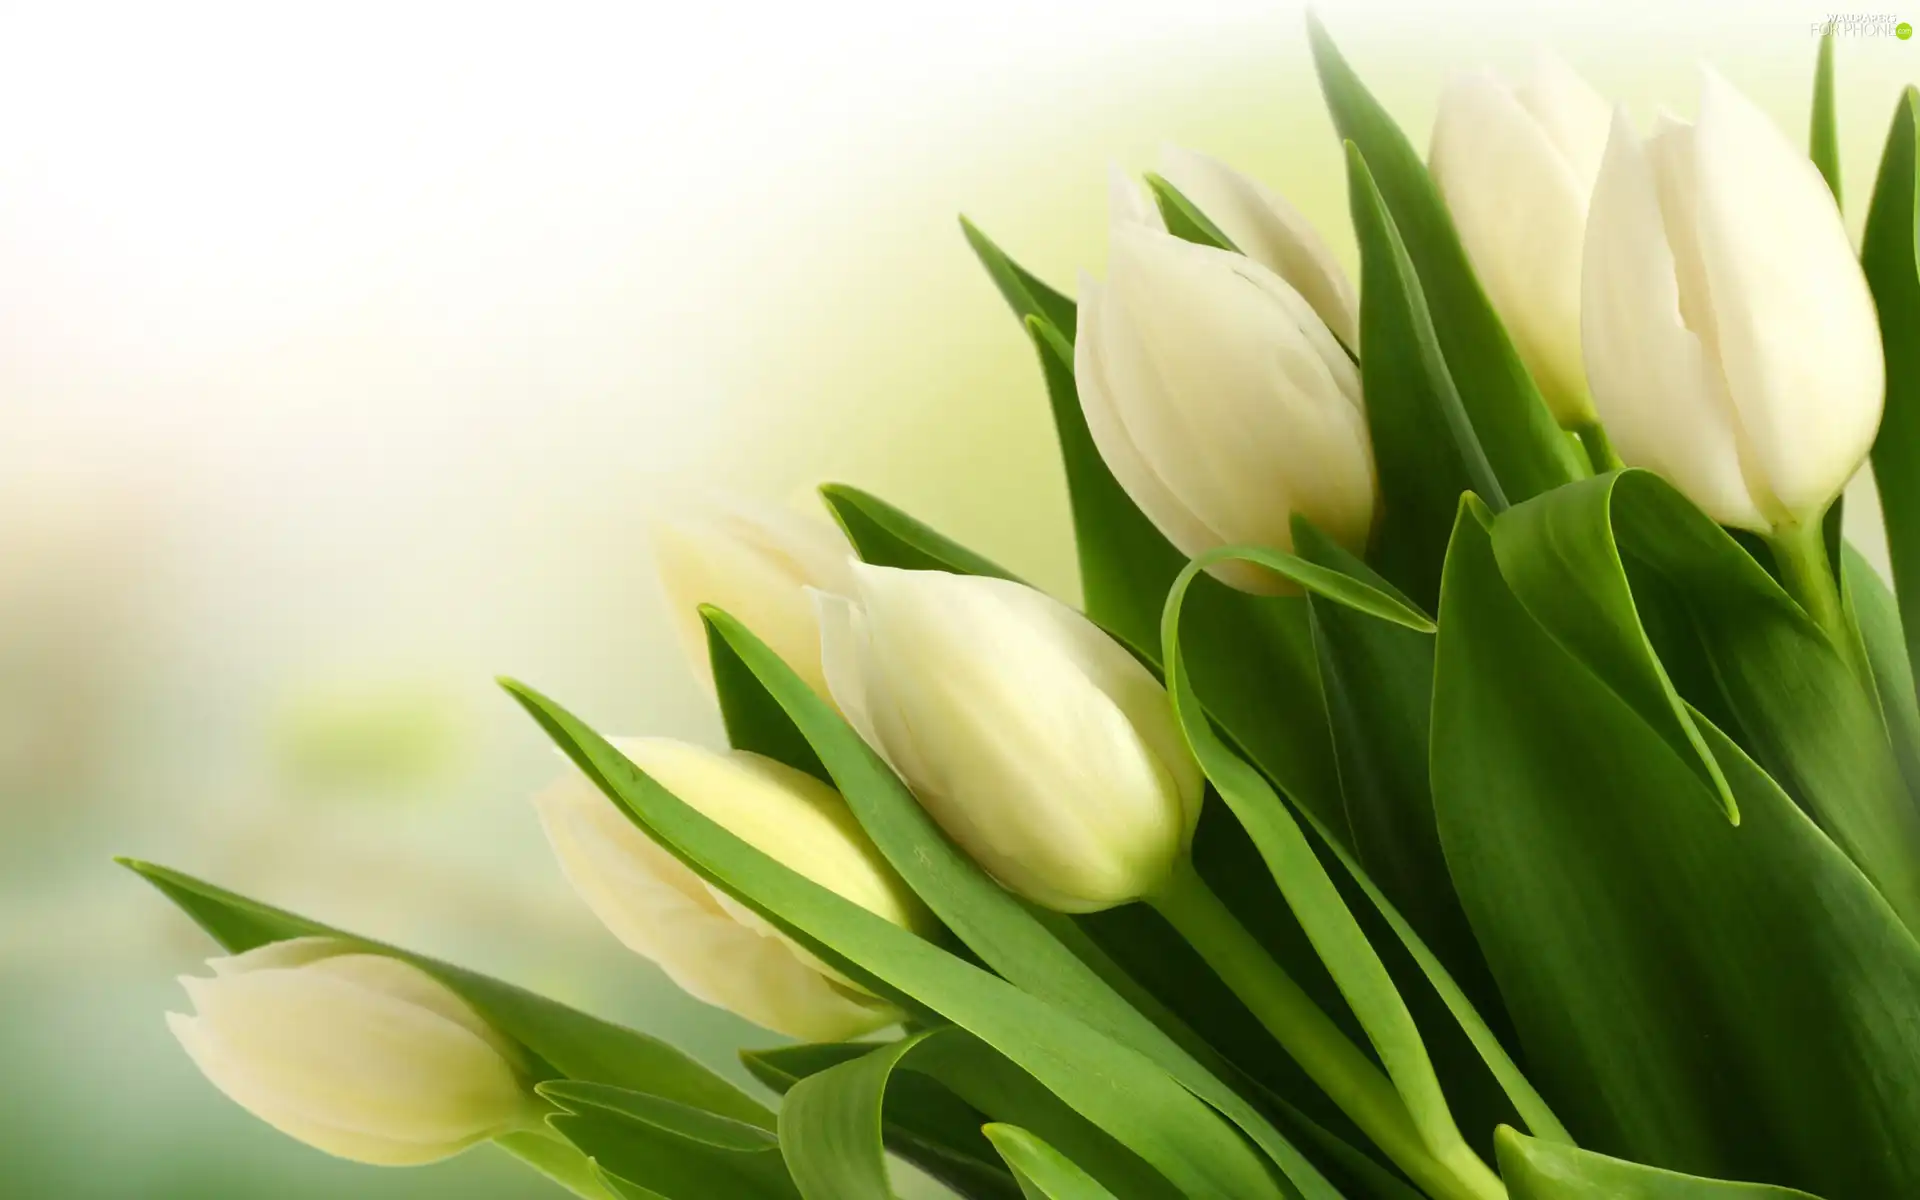 tulips, bouquet, white